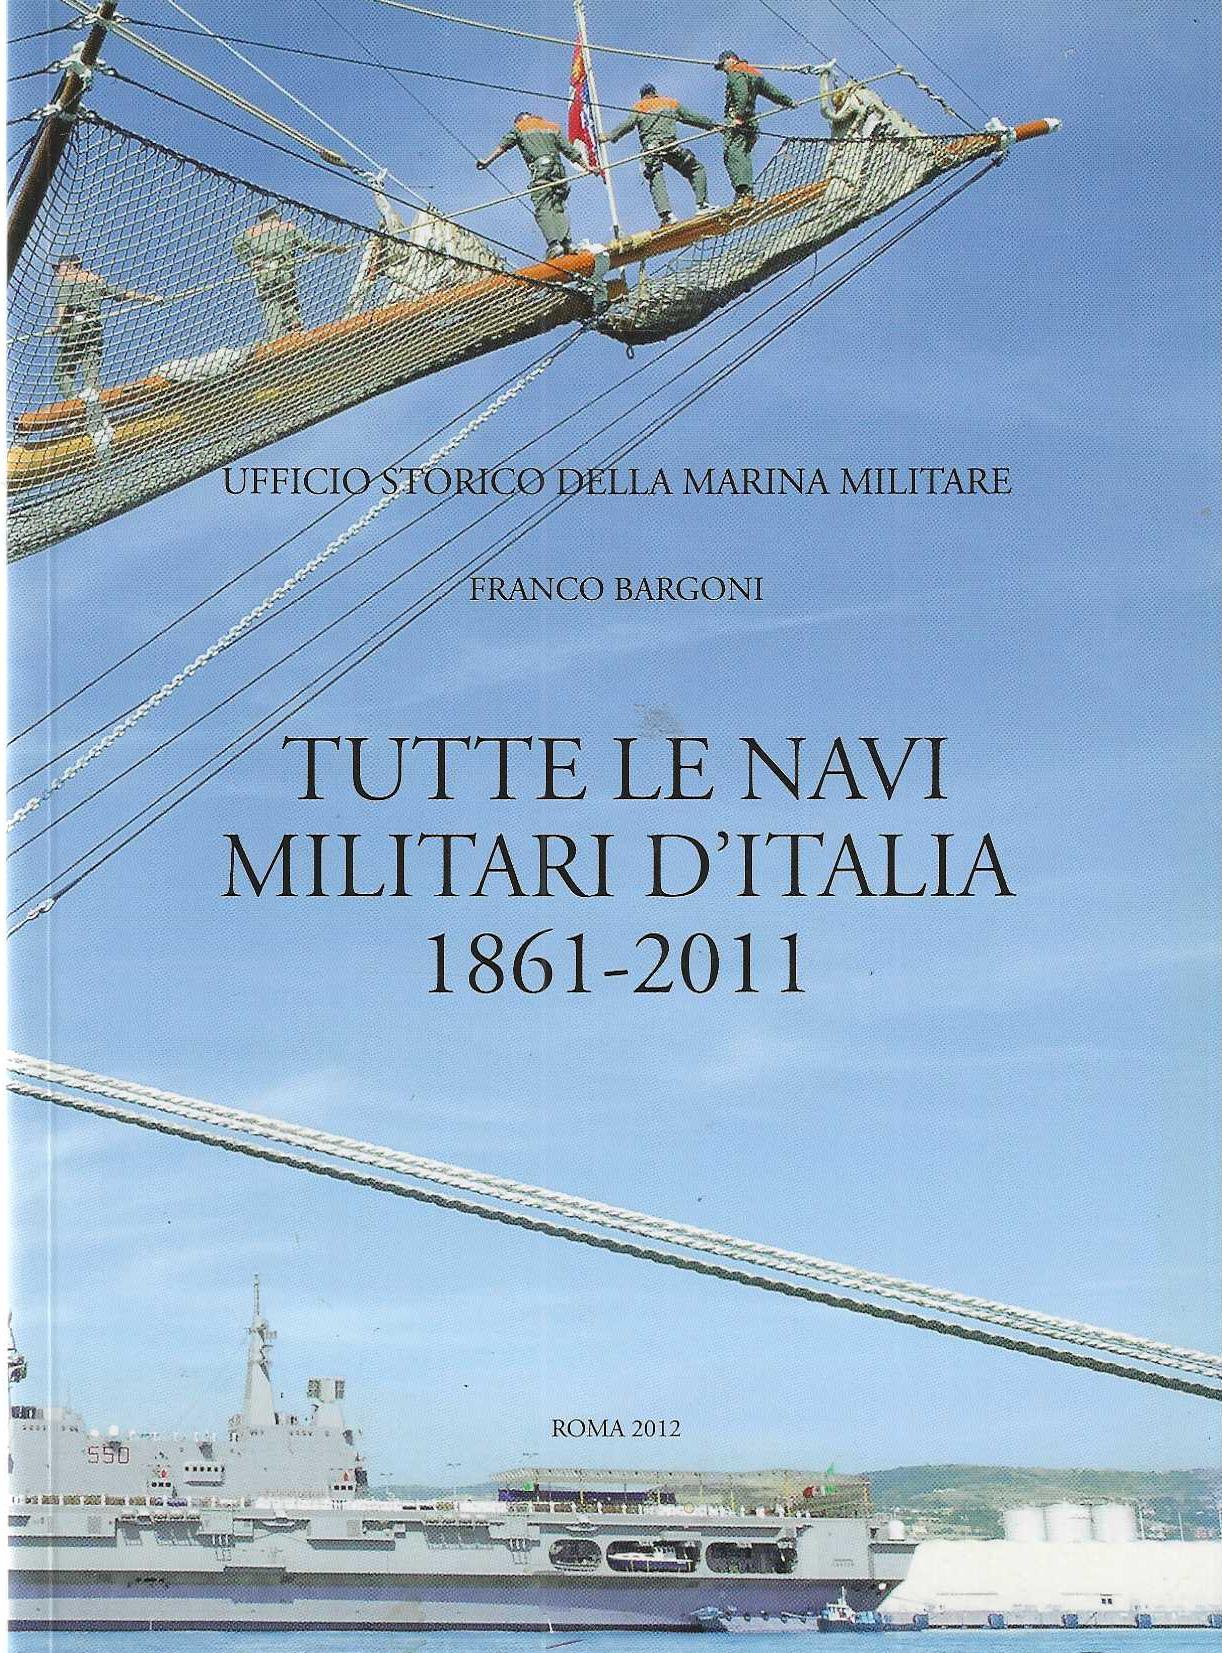 "Tutte le navi militari d'Italia 1861-2011"